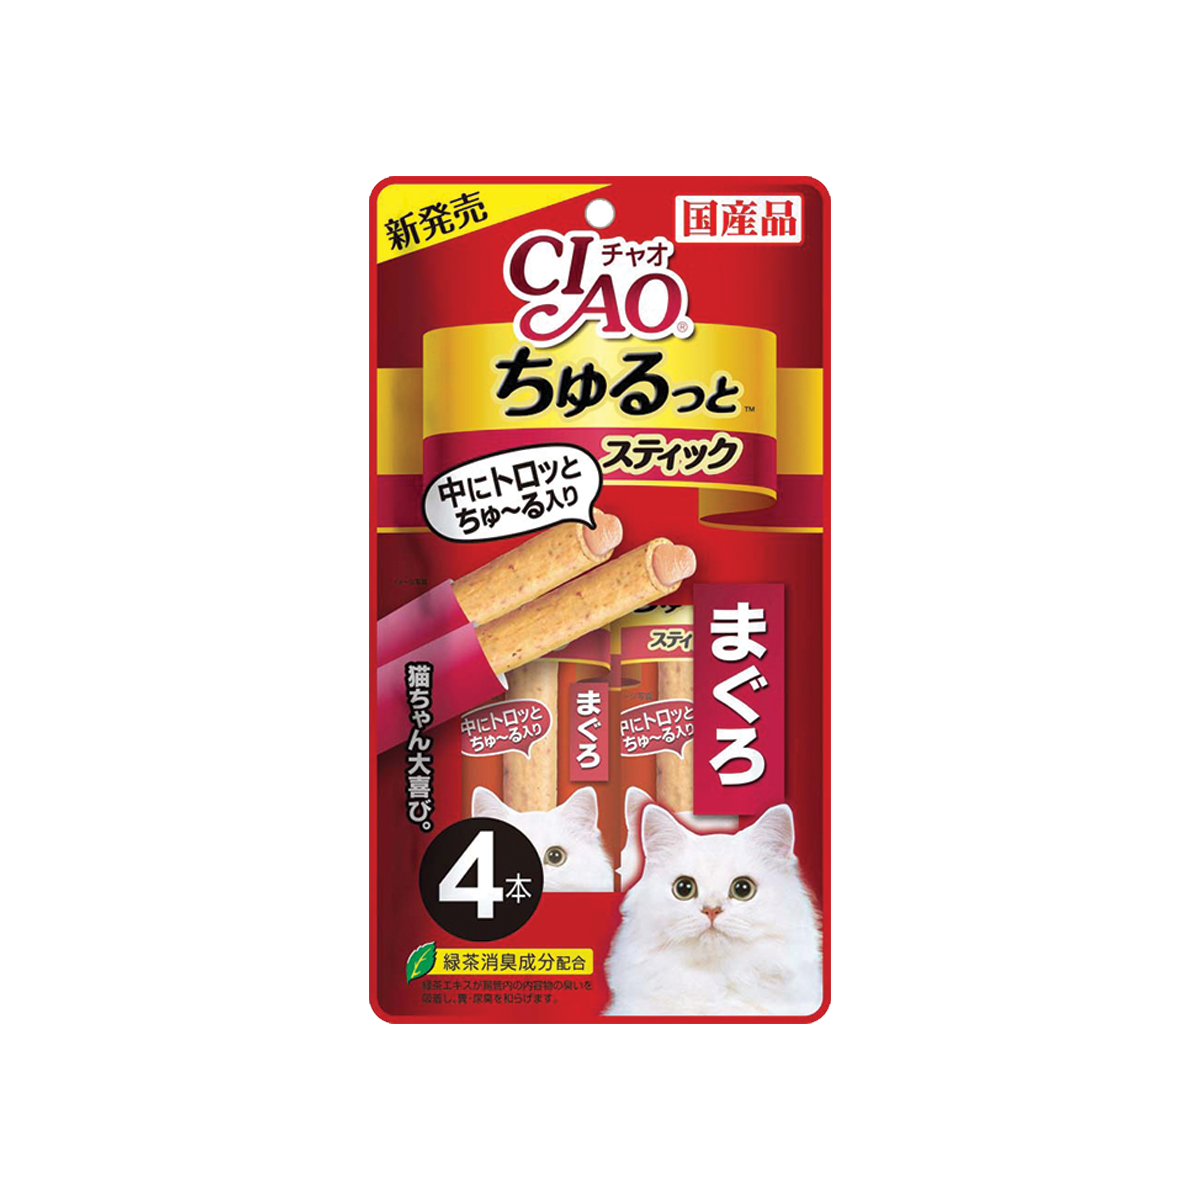 CIAO Churutto Cat Treats Tuna Maguro Liquid Flavor เชาว์ ชูหรุโตะ ขนมแมวสติ๊กสอดไส้แบบเเท่ง สูตรมากุโระ ขนาด 112 กรัม